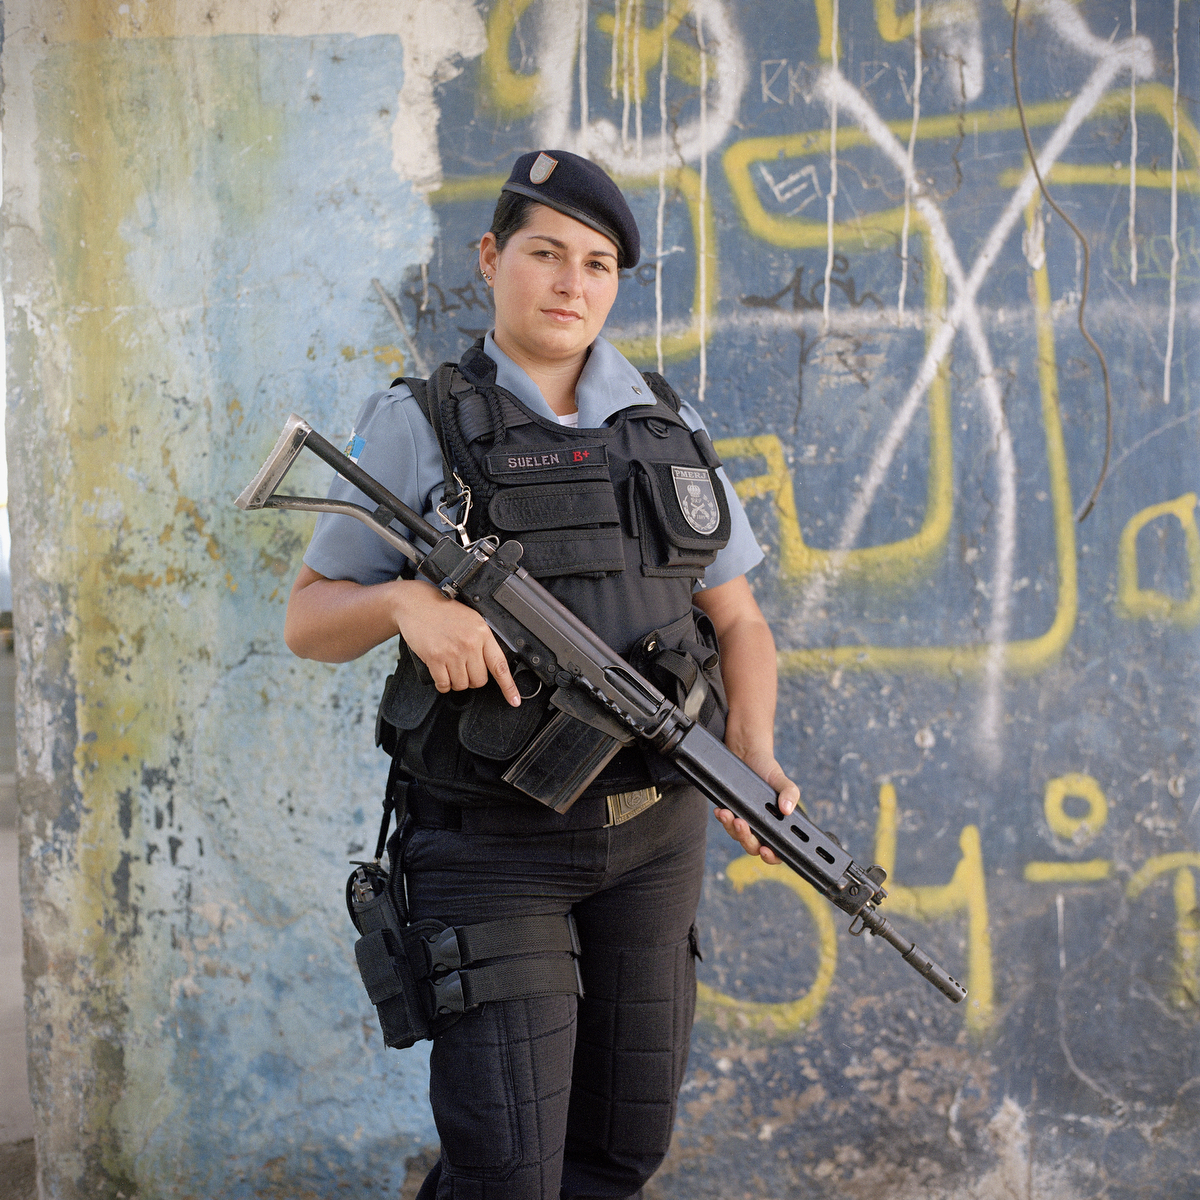 Svelen Araujo, 27, with the Rapid Response Team of the Pacifying Police Unit (UPP), in Complexo do Caju, Rio de Janeiro, Brazil.